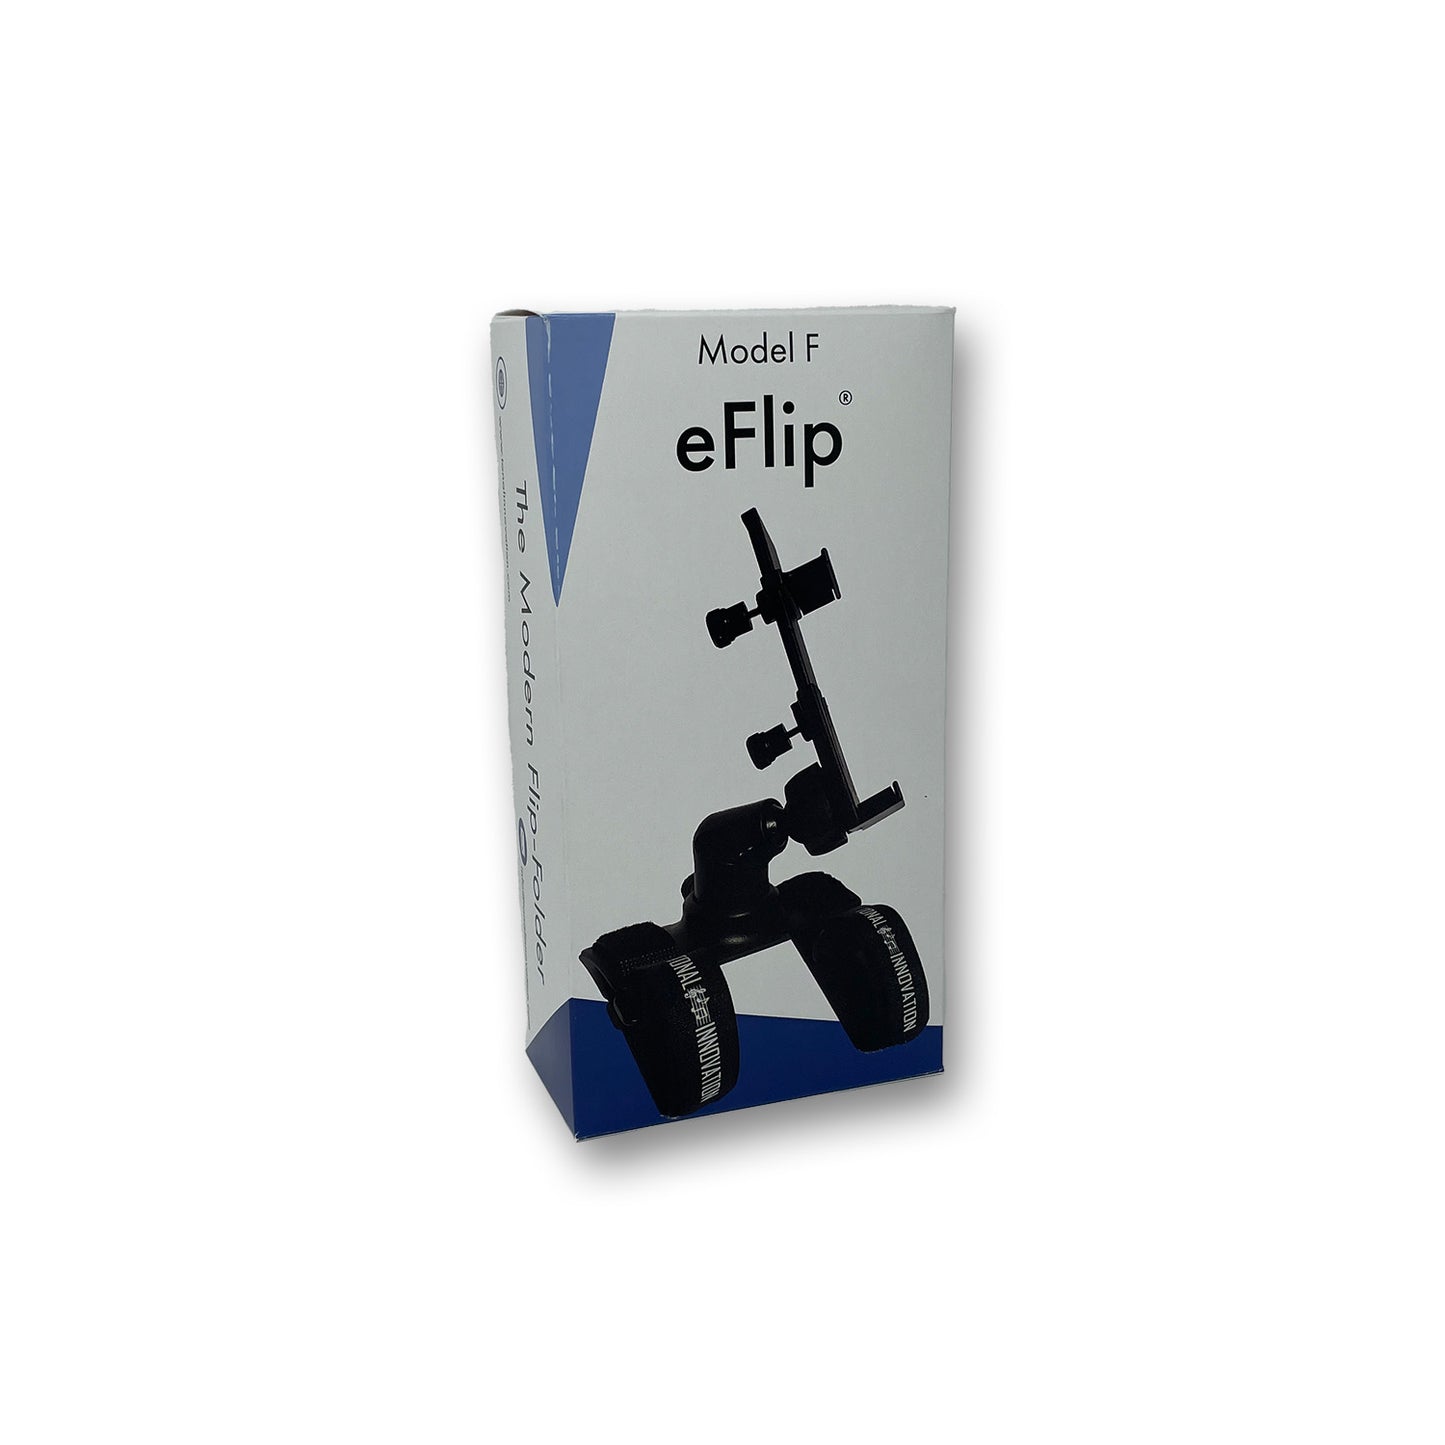 eFlip Model F - Version 1.0